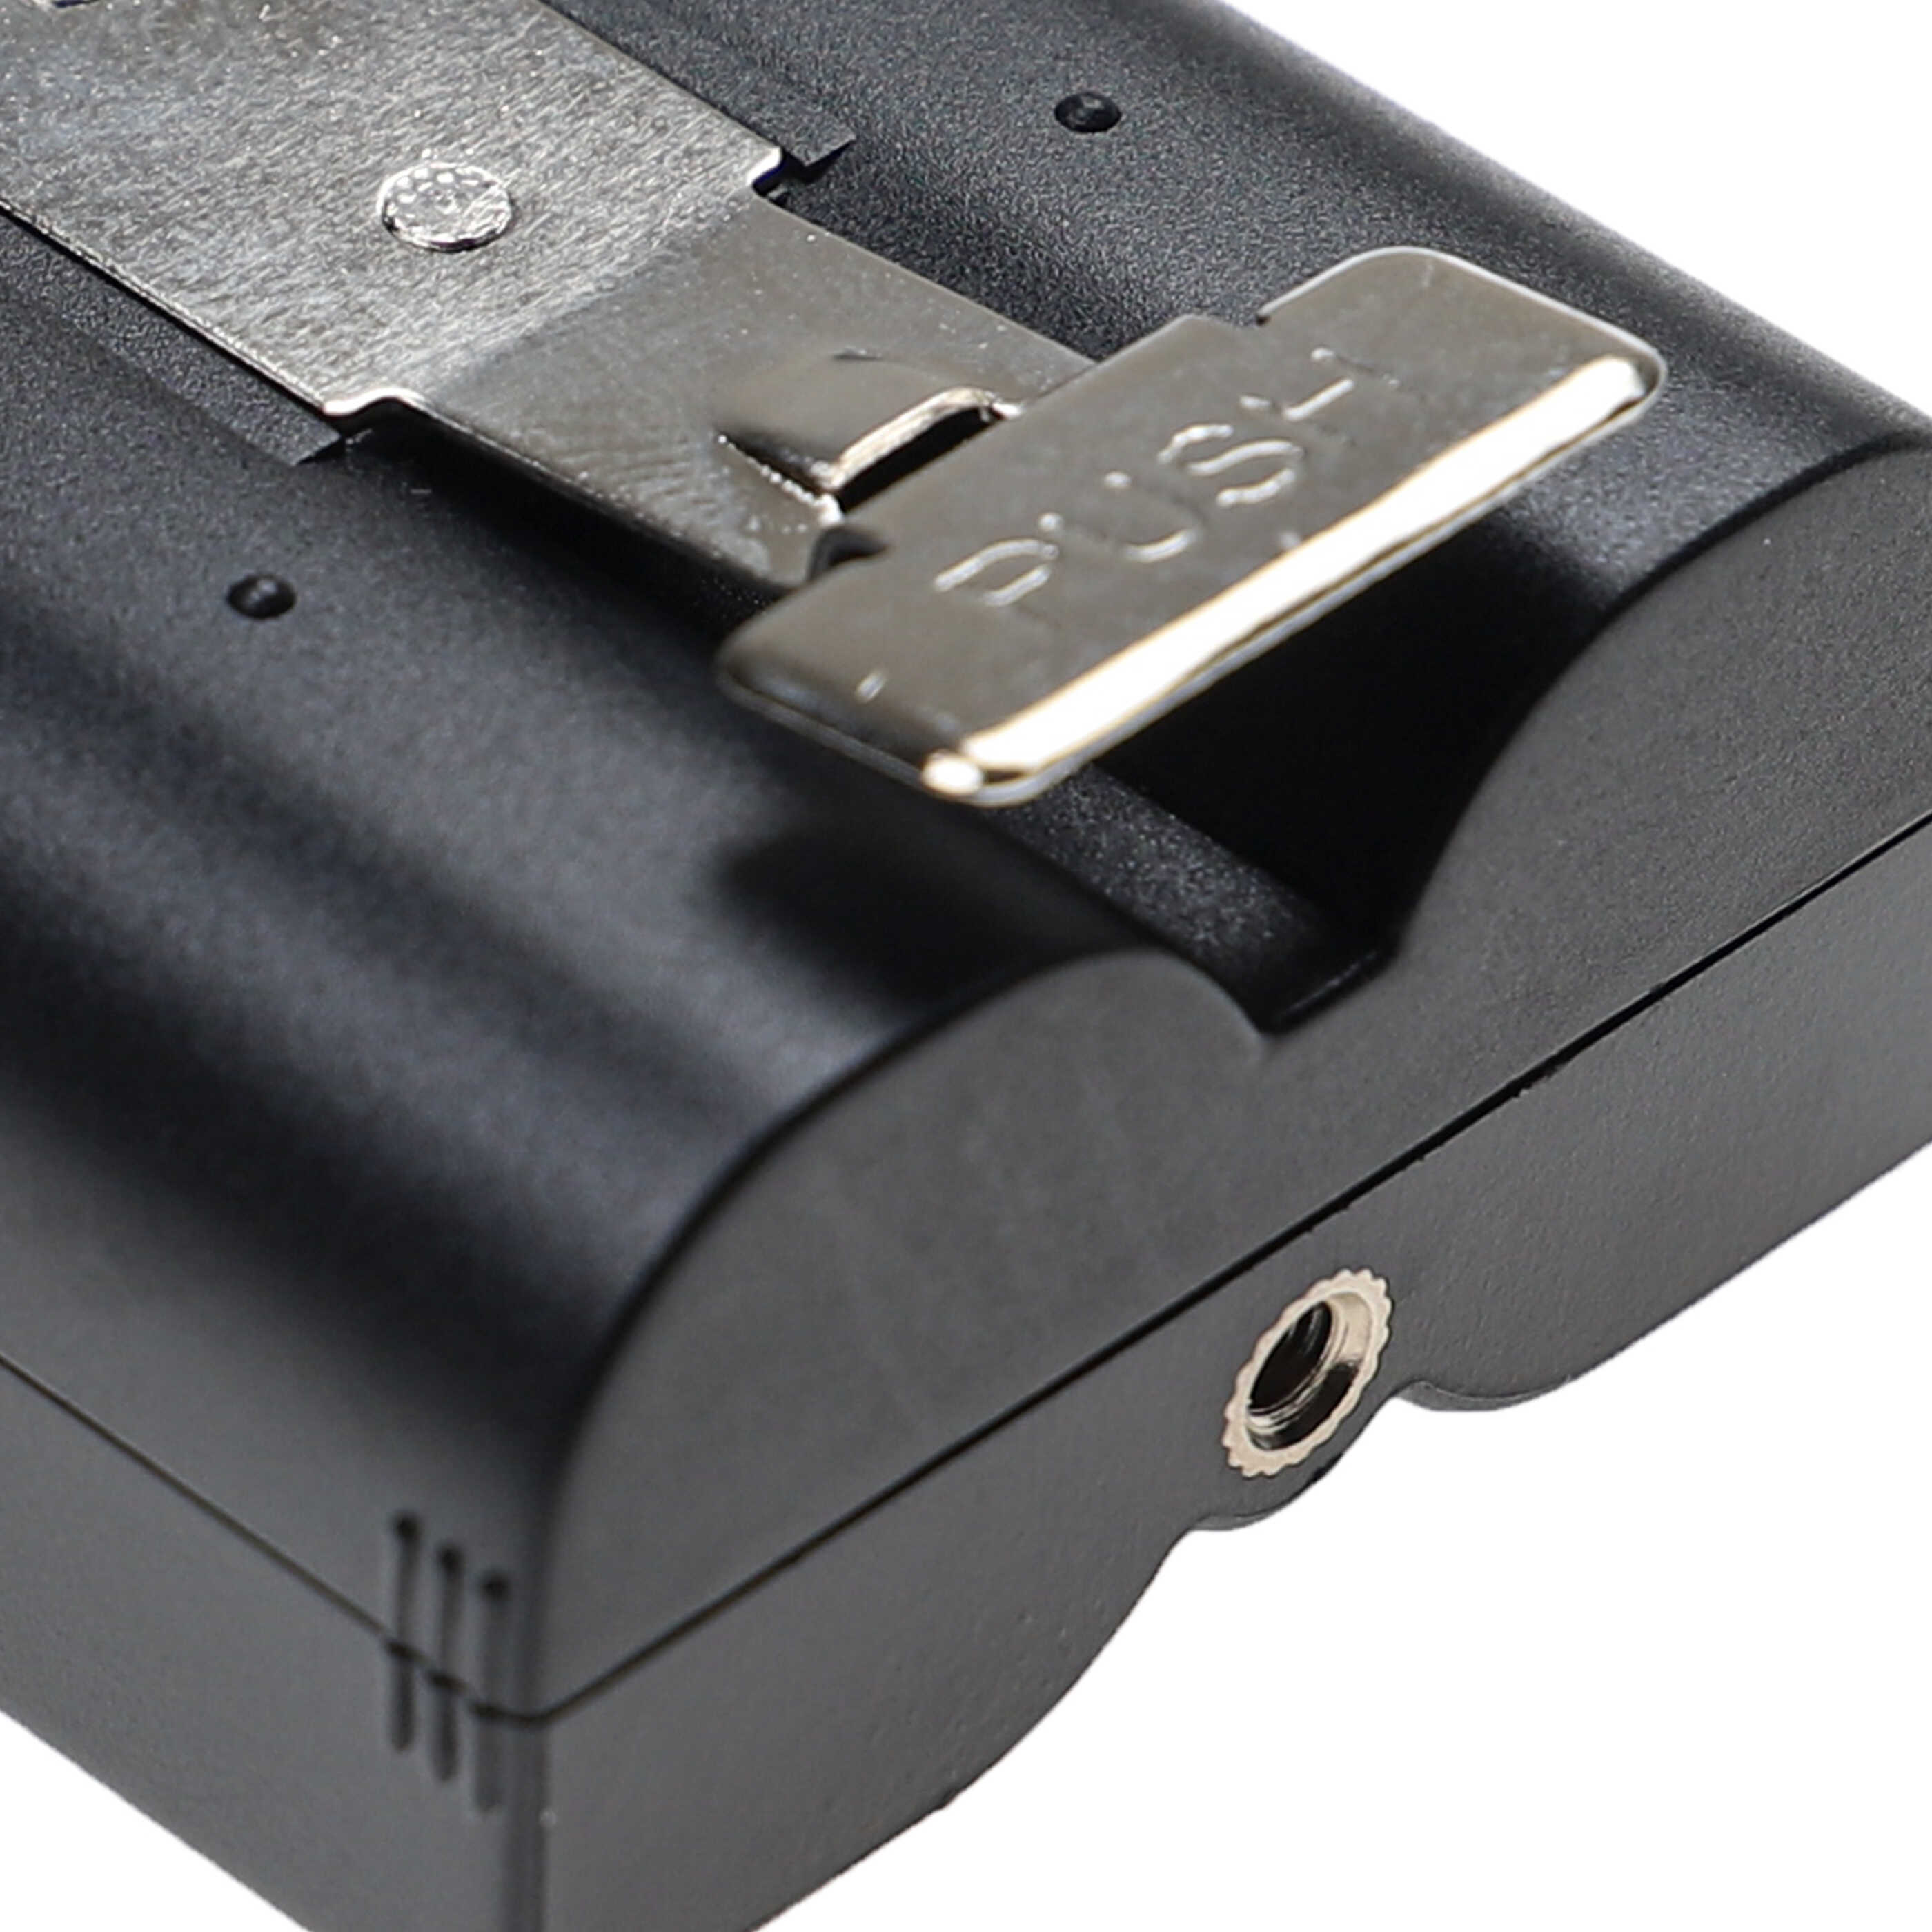 Intercom Doorbell Battery Replacement for Ring 8AB1S7-0EN0 - 6040mAh 3.65V Li-Ion